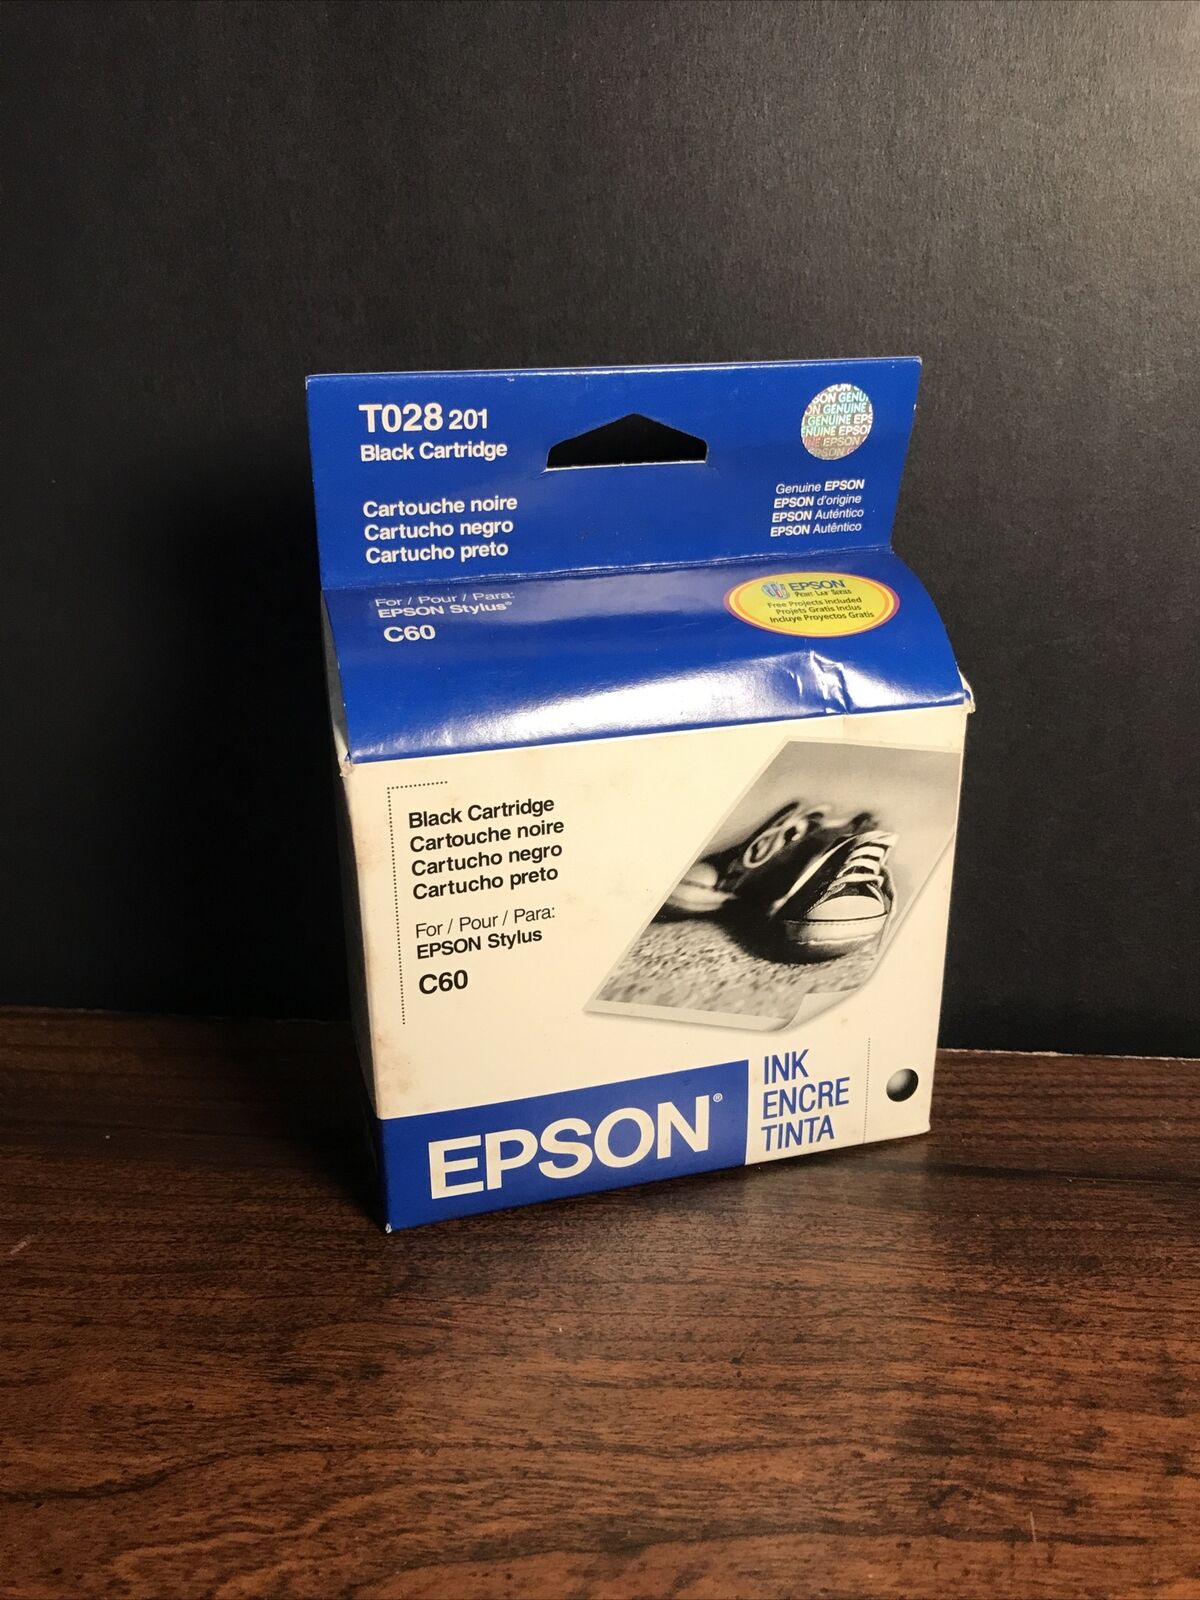 EPSON T028 201 Black Cartridge for Stylus C60 Genuine Expired 2005